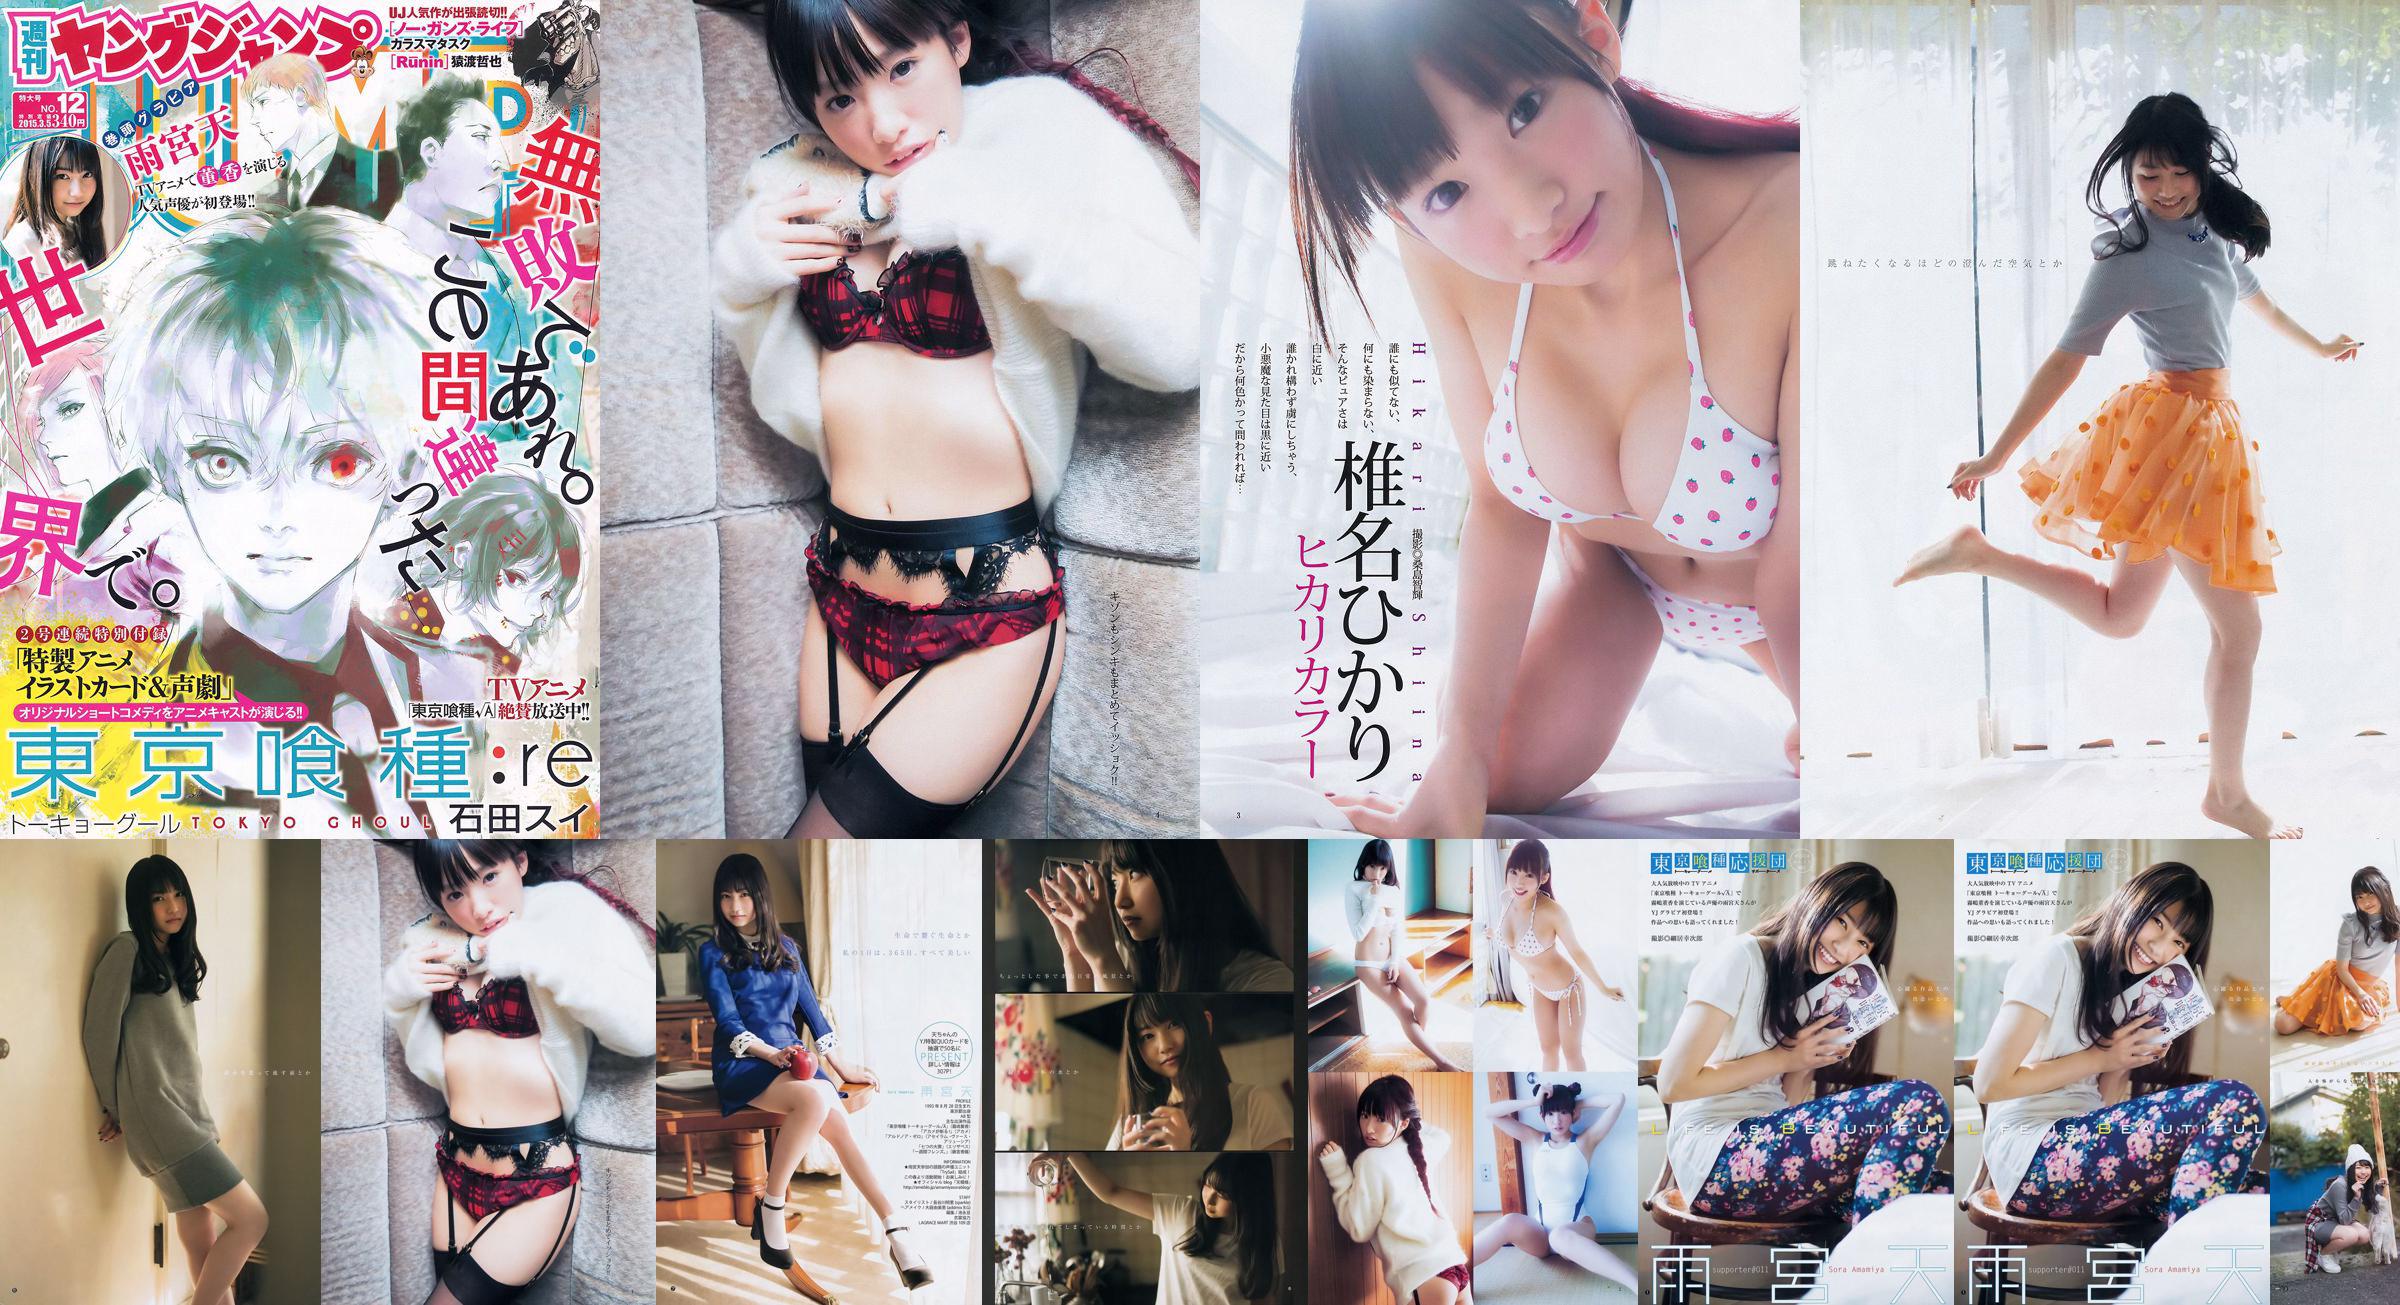 Amamiya Tian Shiina ひ か り [Jeune saut hebdomadaire] 2015 n ° 12 Photo Magazine No.6787de Page 3